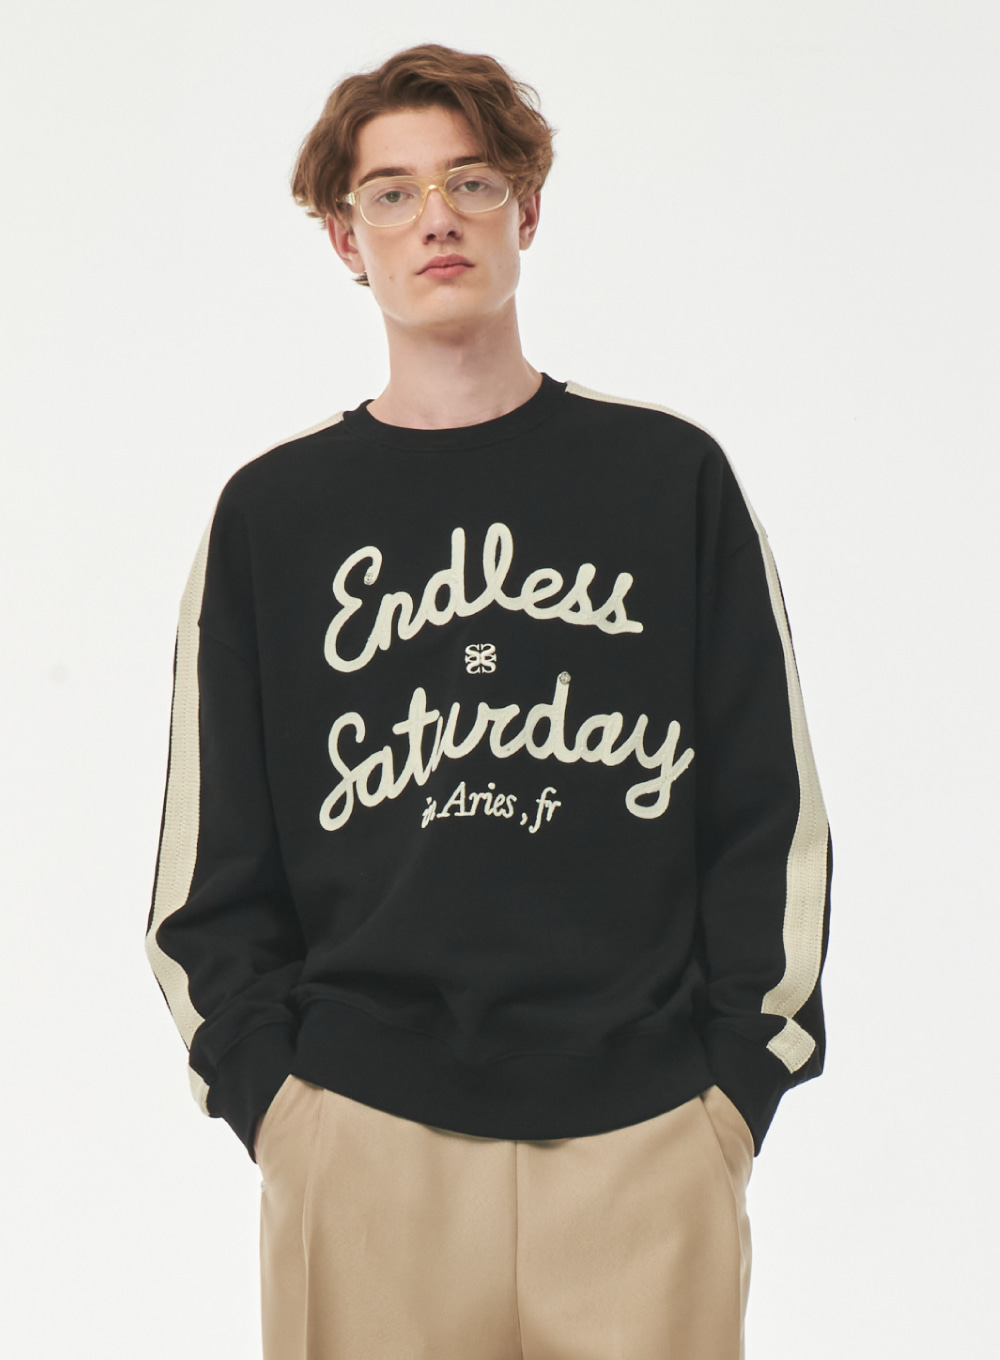 Endless Saturday Sweatshirts - Classic Black